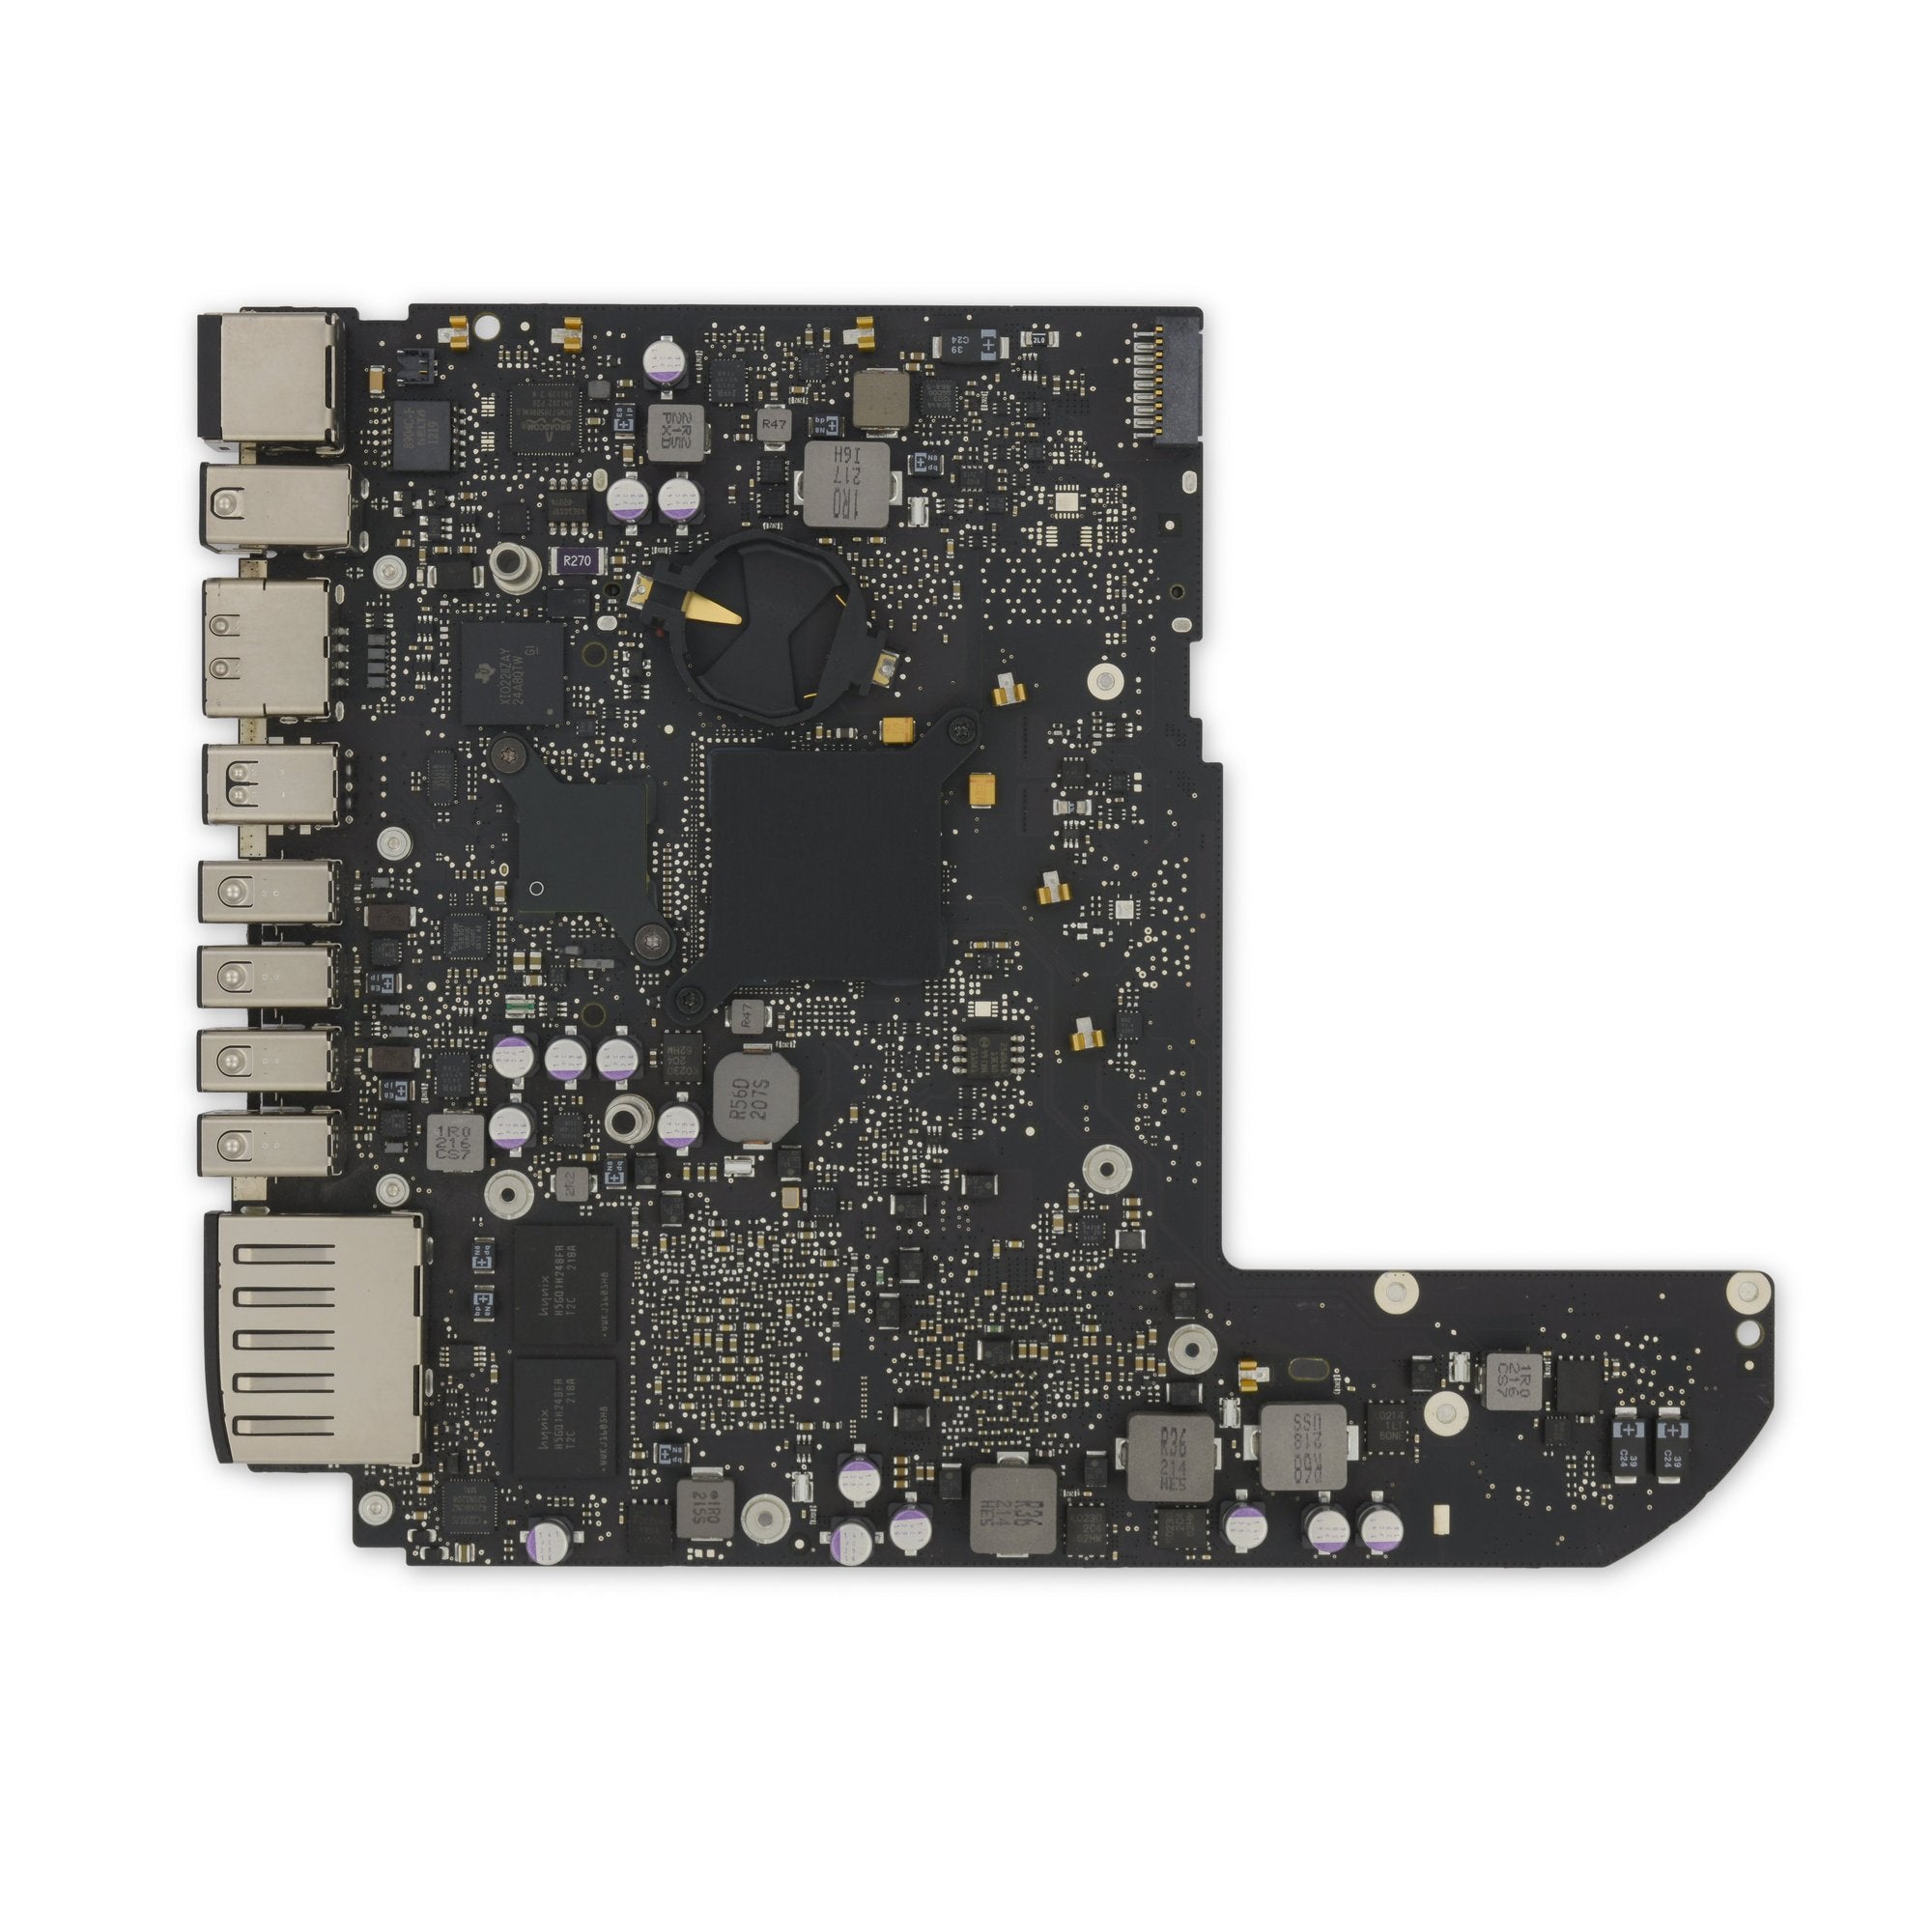 Mac mini A1347 (Mid 2011) 2.5 GHz Logic Board Used